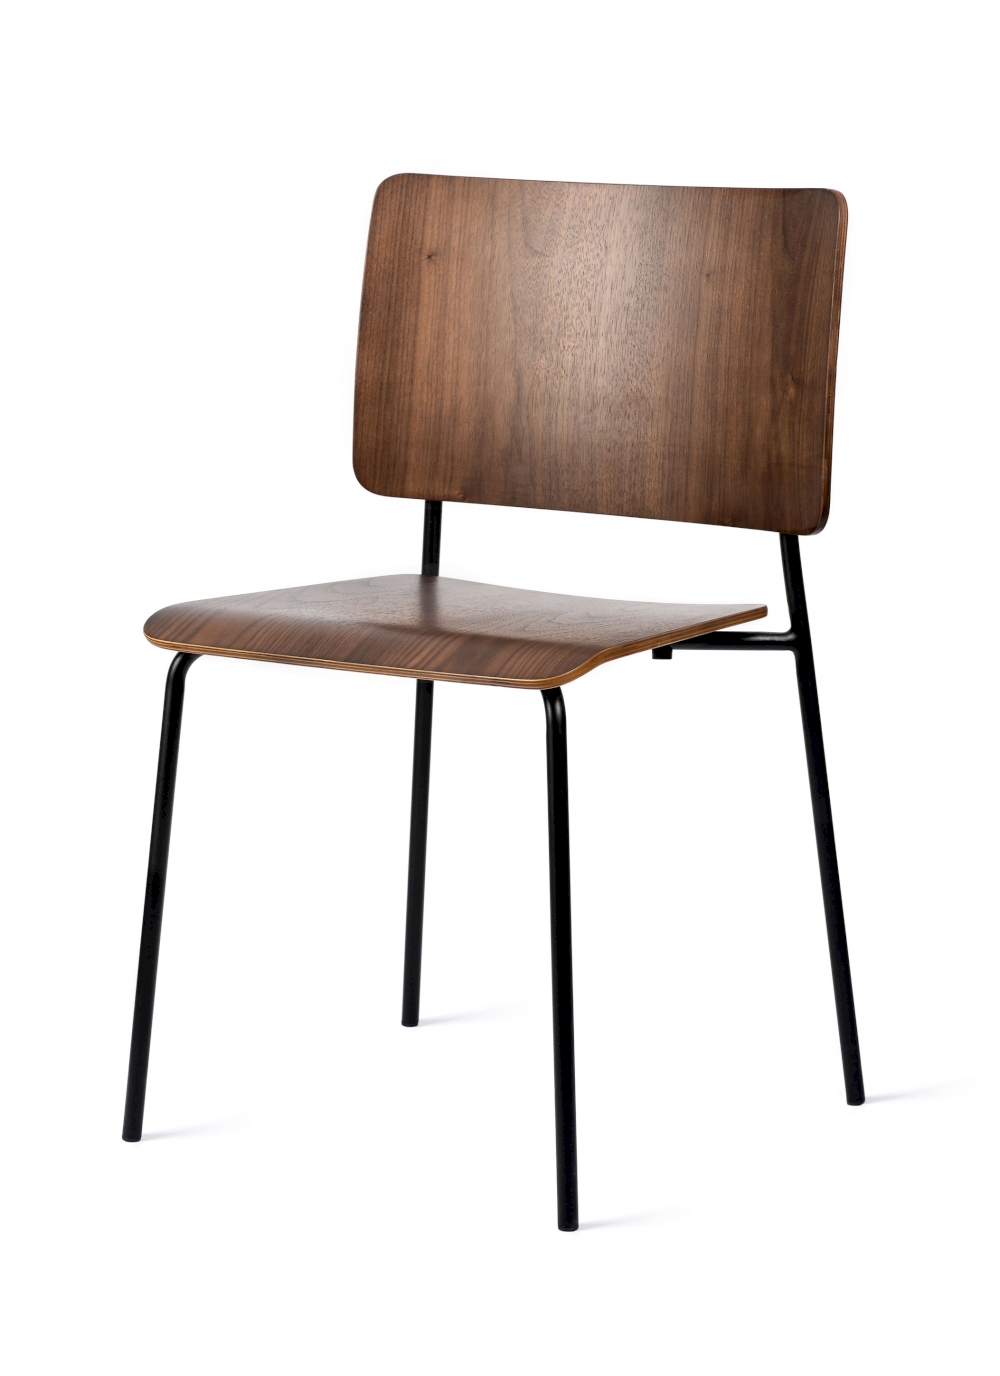 Mi metal base chair. Designed for Dohaus by Mikko Laakkonen.